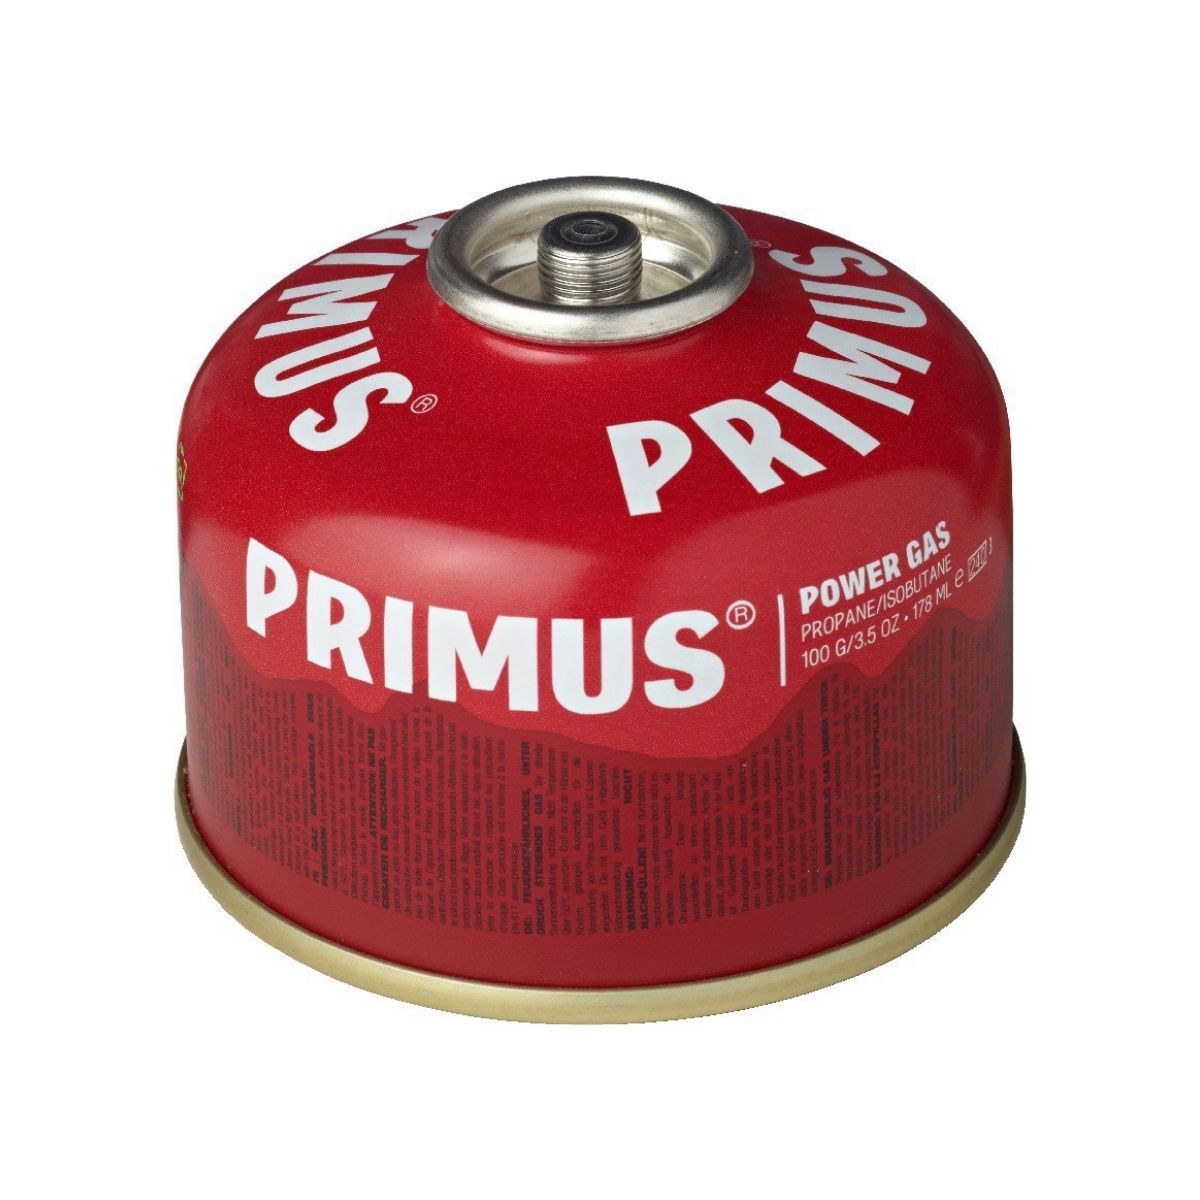 Primus Power Gas 100 g L1 - Turvatyynyn patruuna